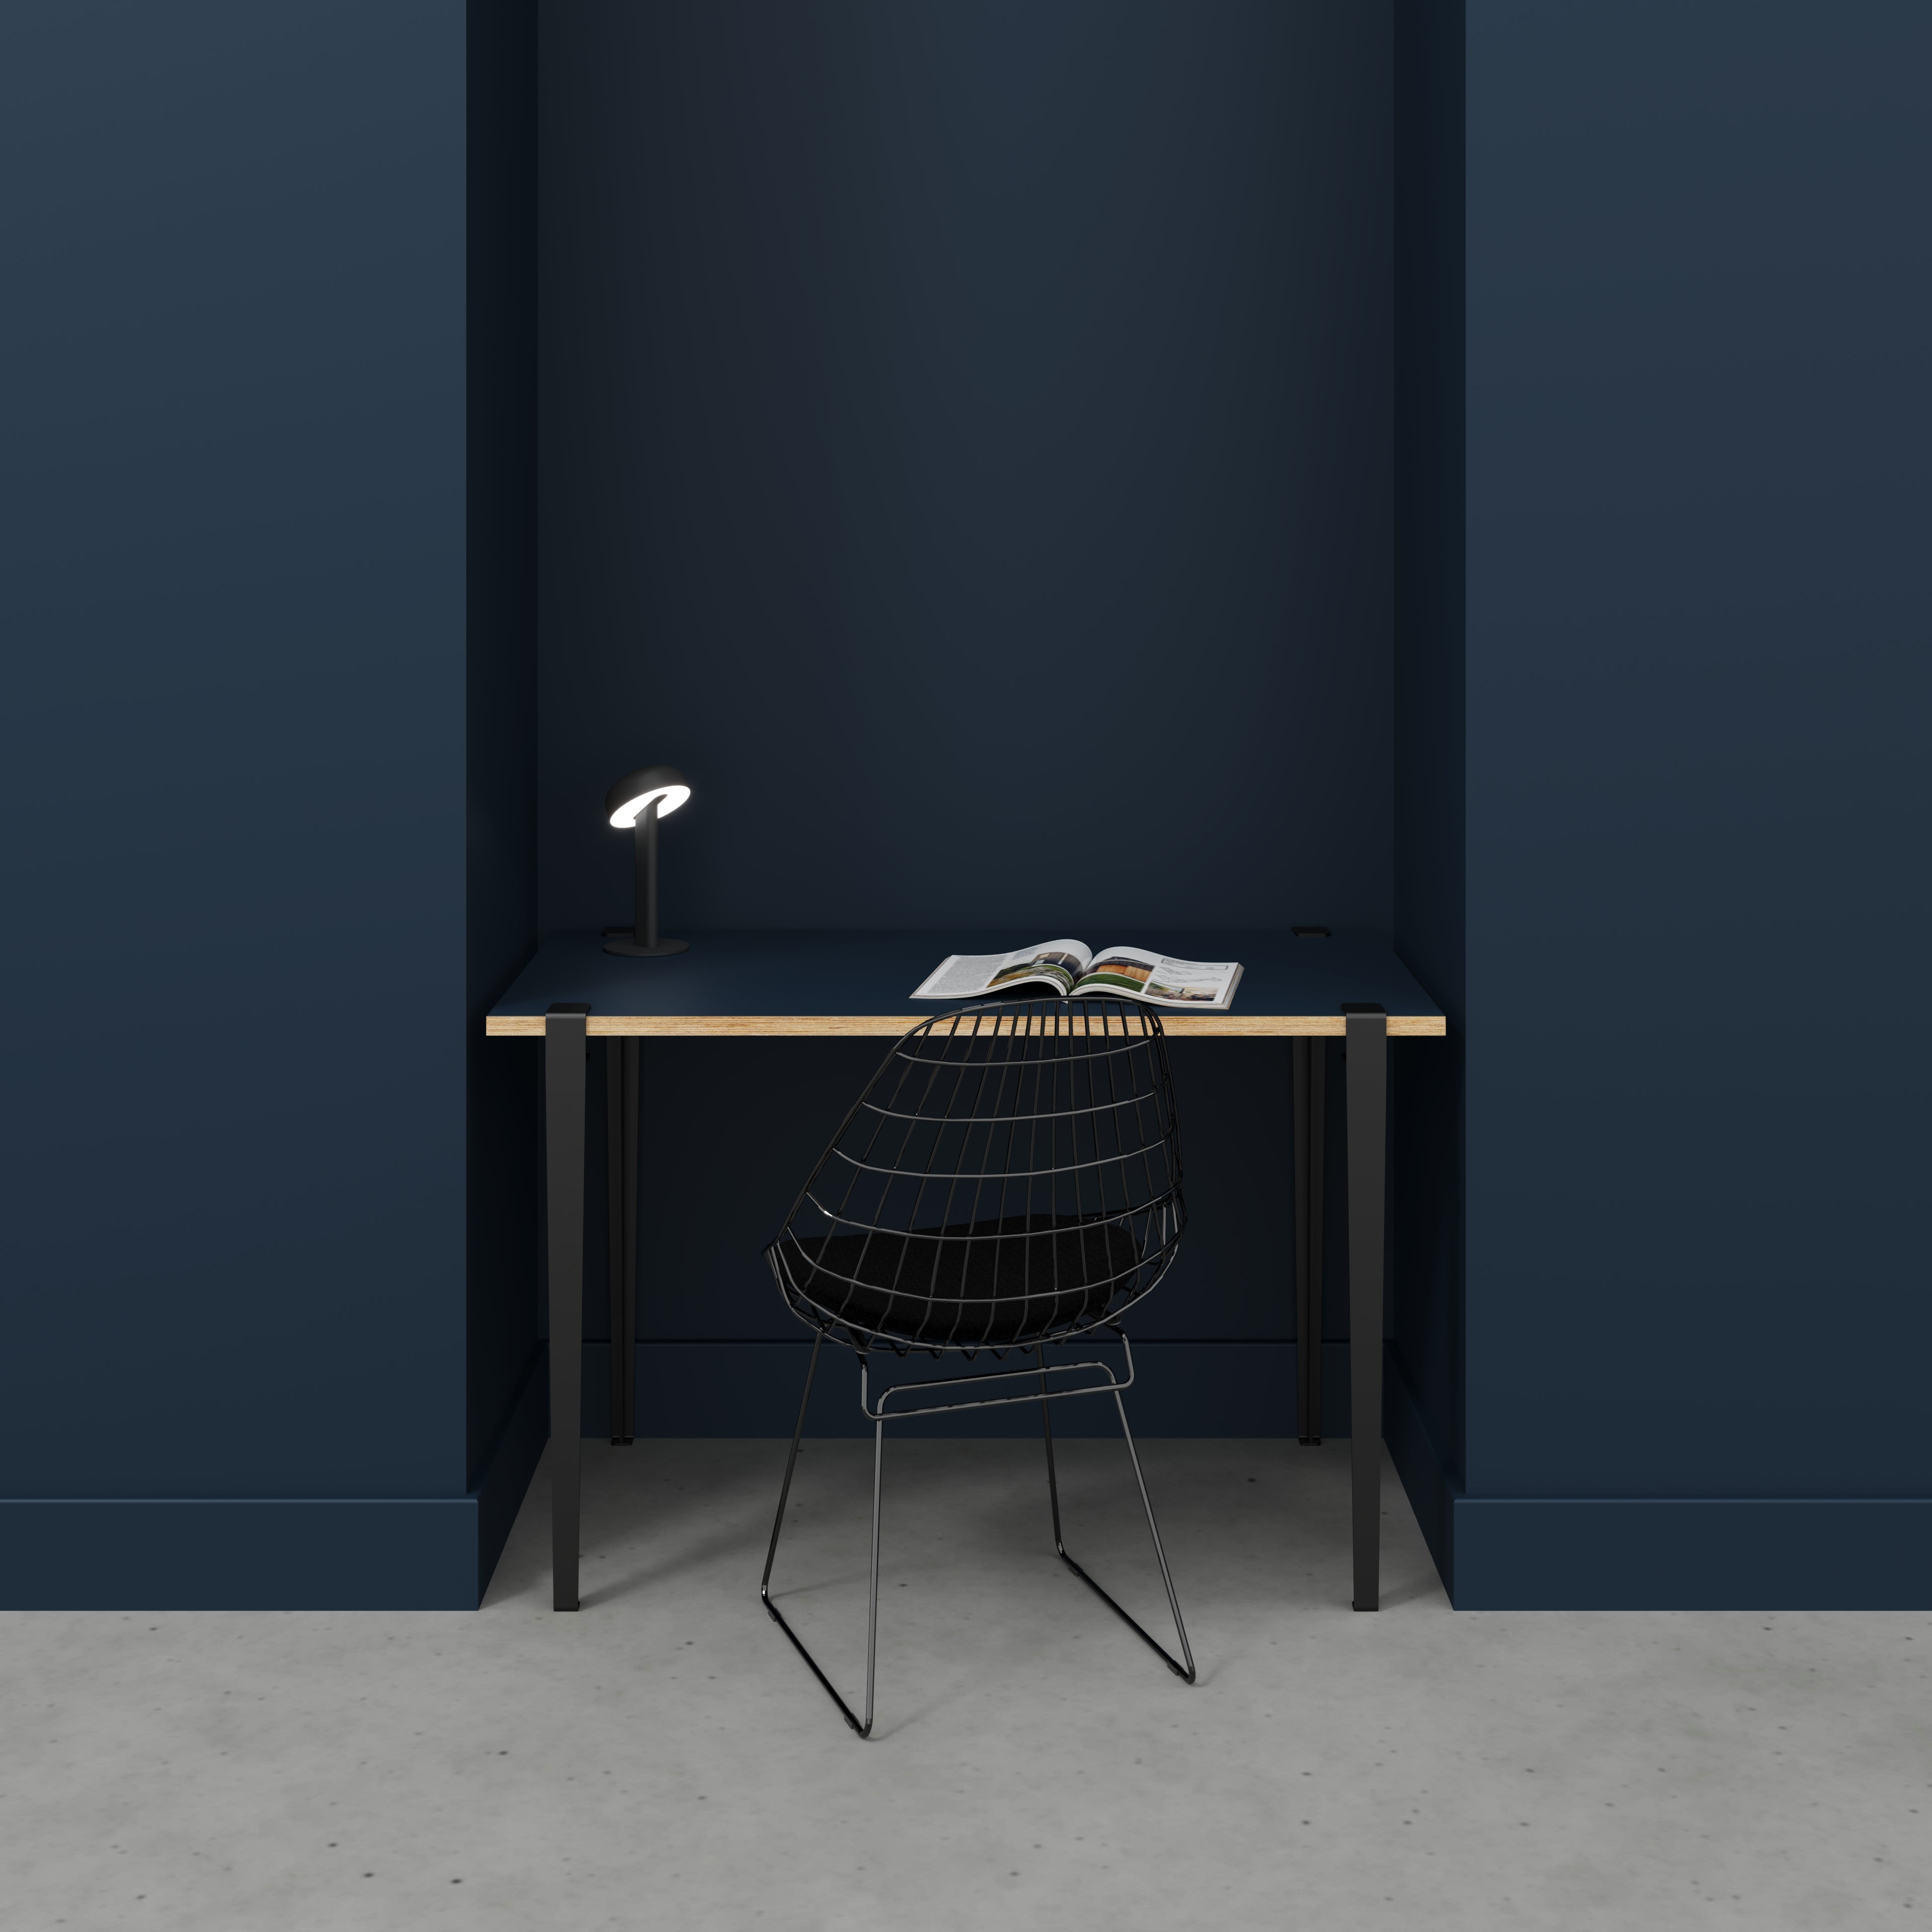 Desk with Black Tiptoe Legs - Formica Night Sea Blue - 1200(w) x 600(d) x 750(h)